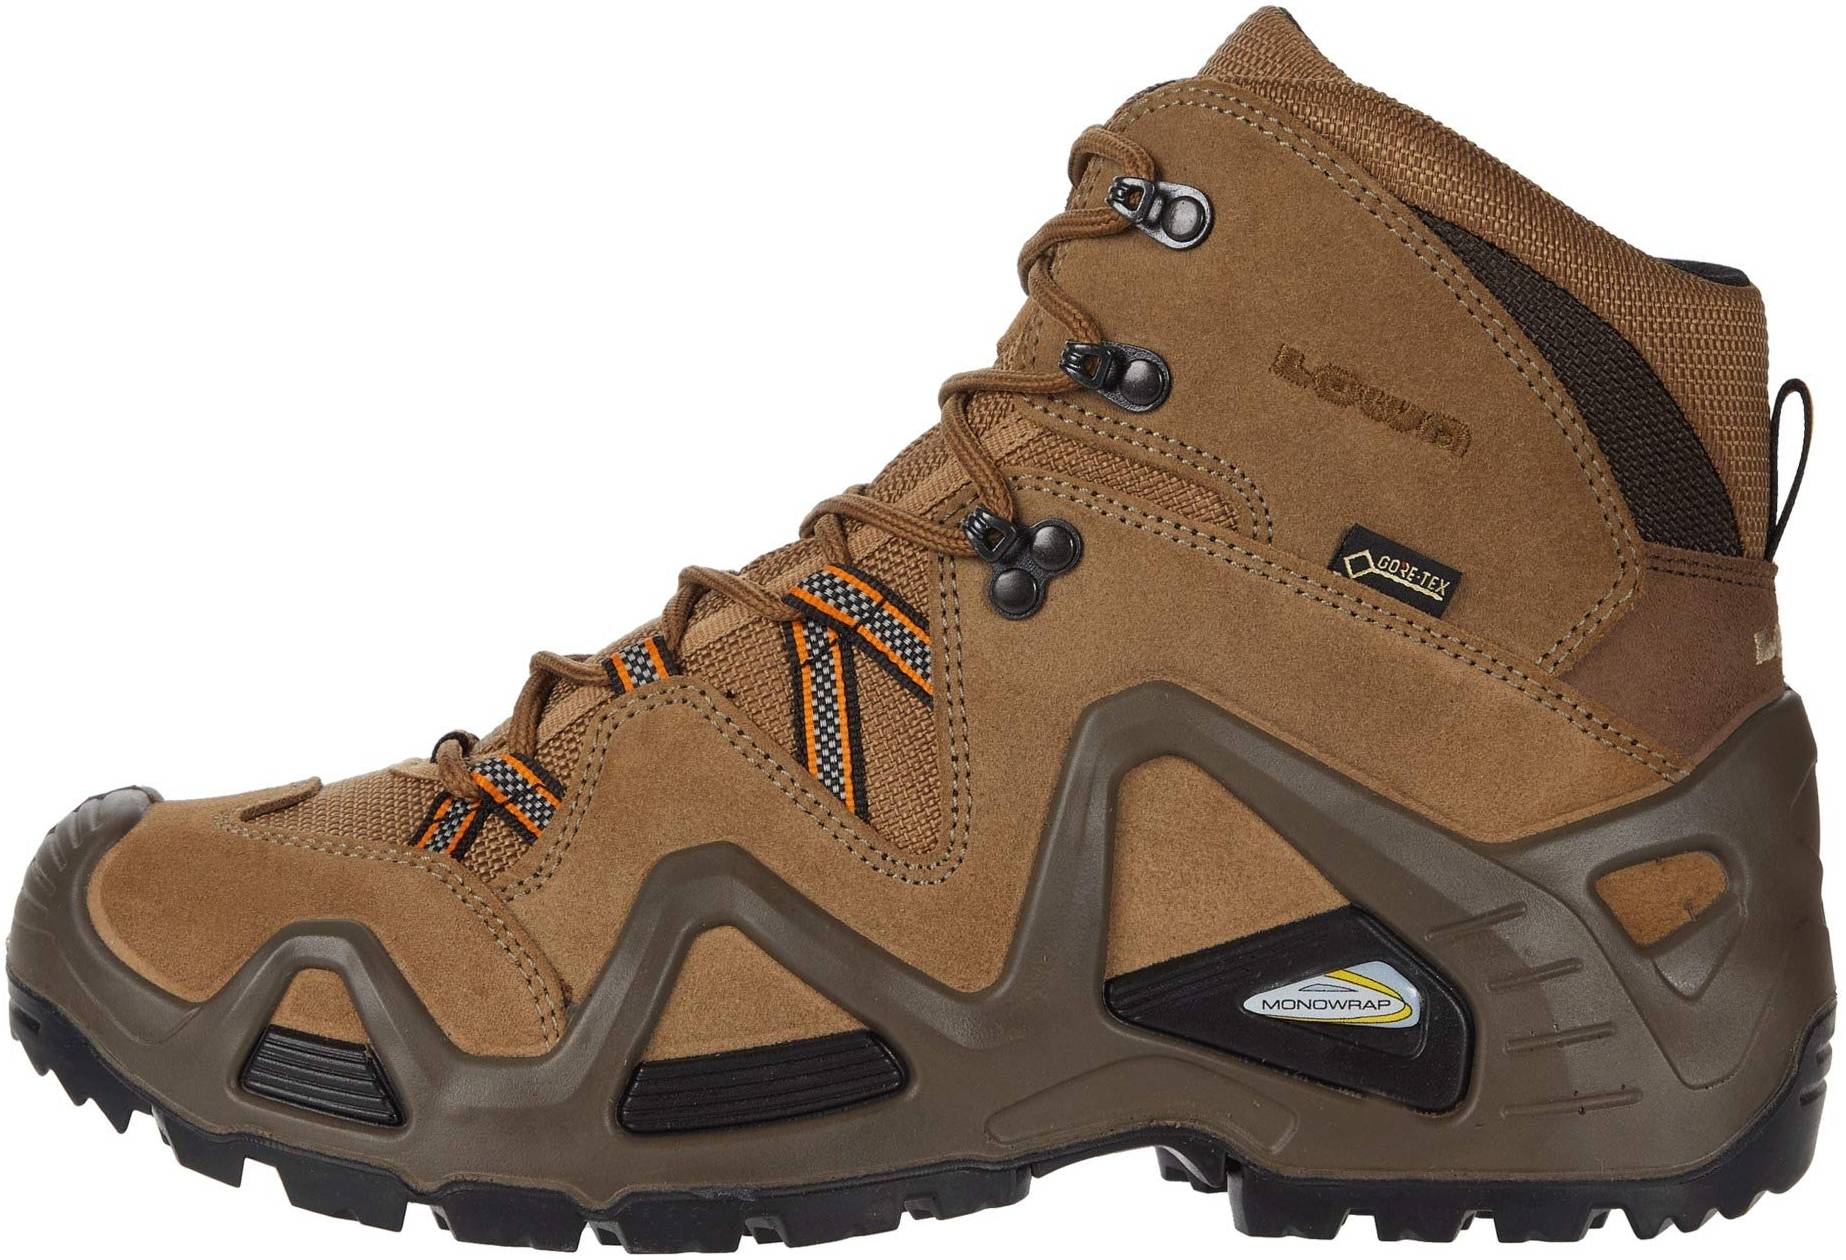 German Army LOWA Civetta Extreme Gore-Tex Waterproof Mountain Boots Size 6.5 40 